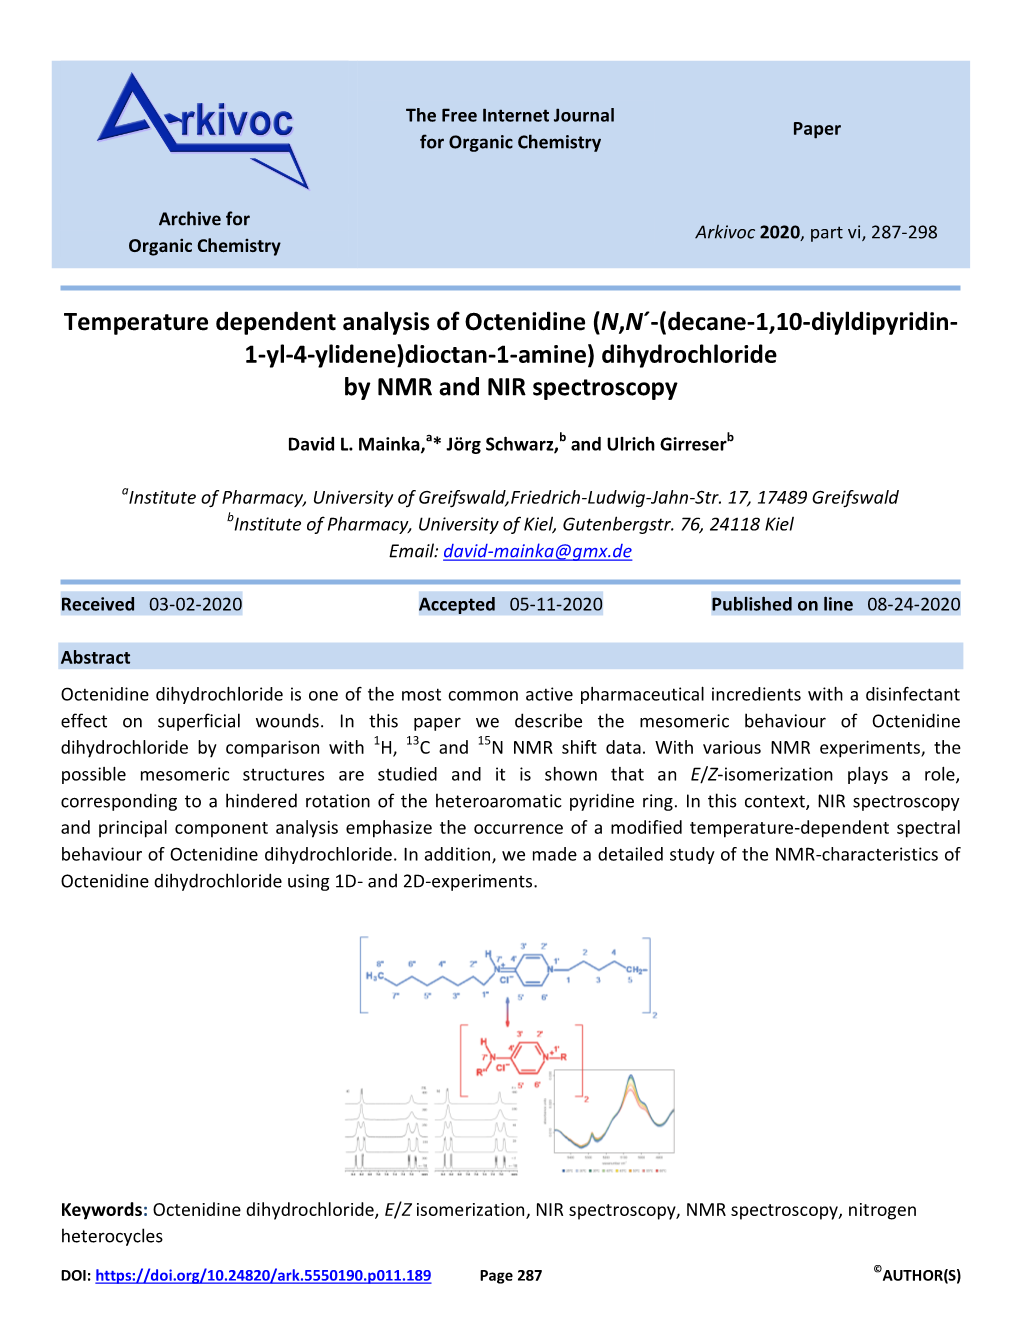 Temperature Dependent Analysis of Octenidine (N,N´-(Decane-1,10-Diyldipyridin- 1-Yl-4-Ylidene)Dioctan-1-Amine) Dihydrochloride by NMR and NIR Spectroscopy